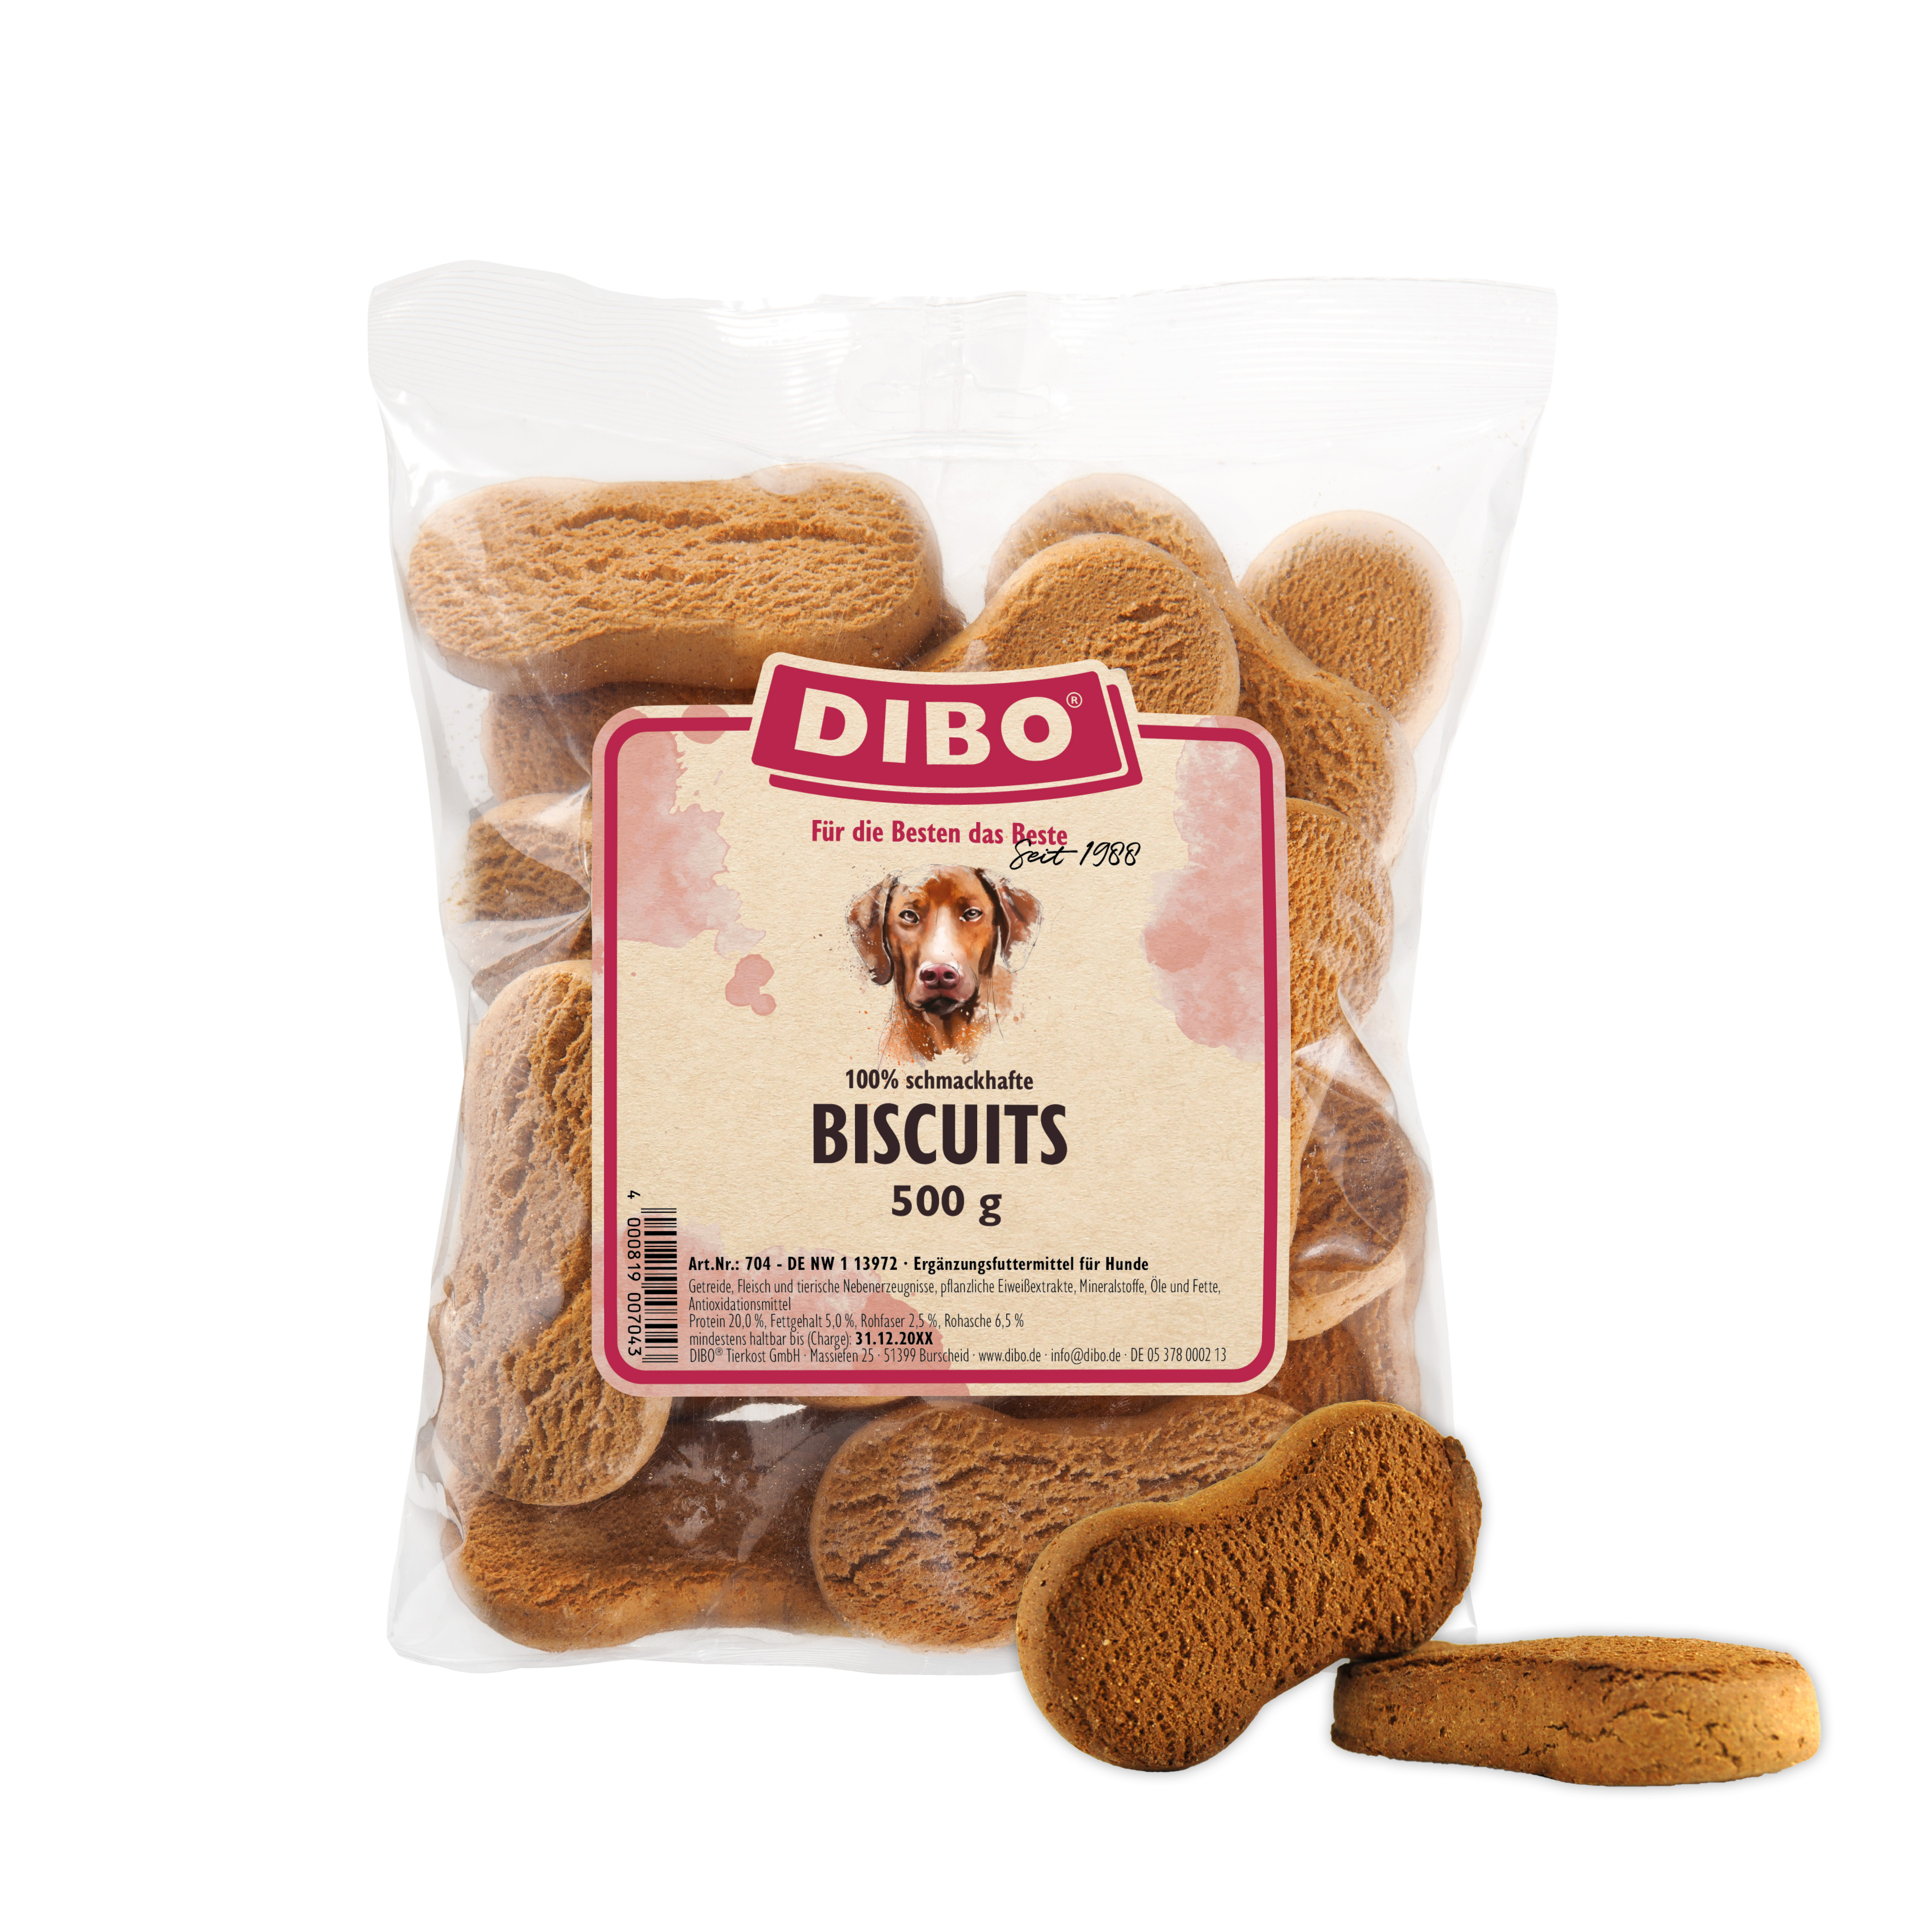 DIBO Biscuits, 500g-Beutel